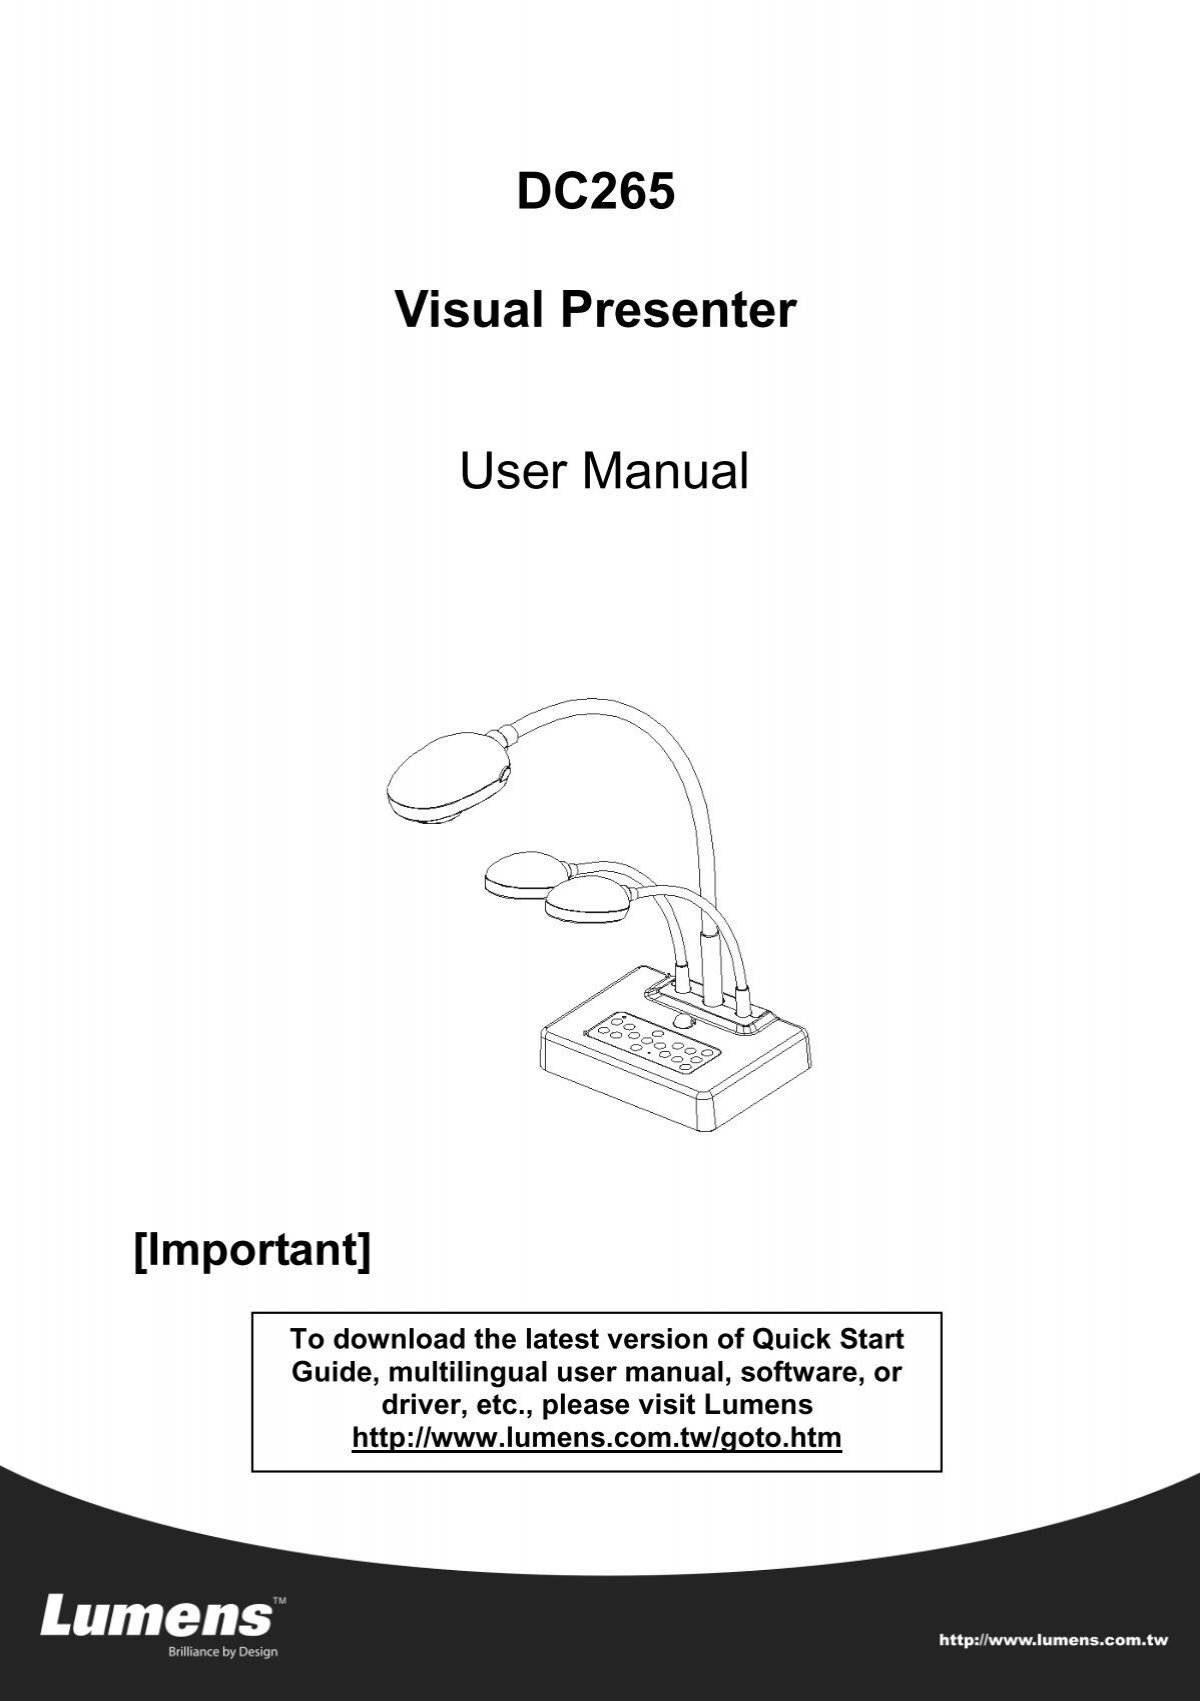 Visual presenter v2 driver download windows 7